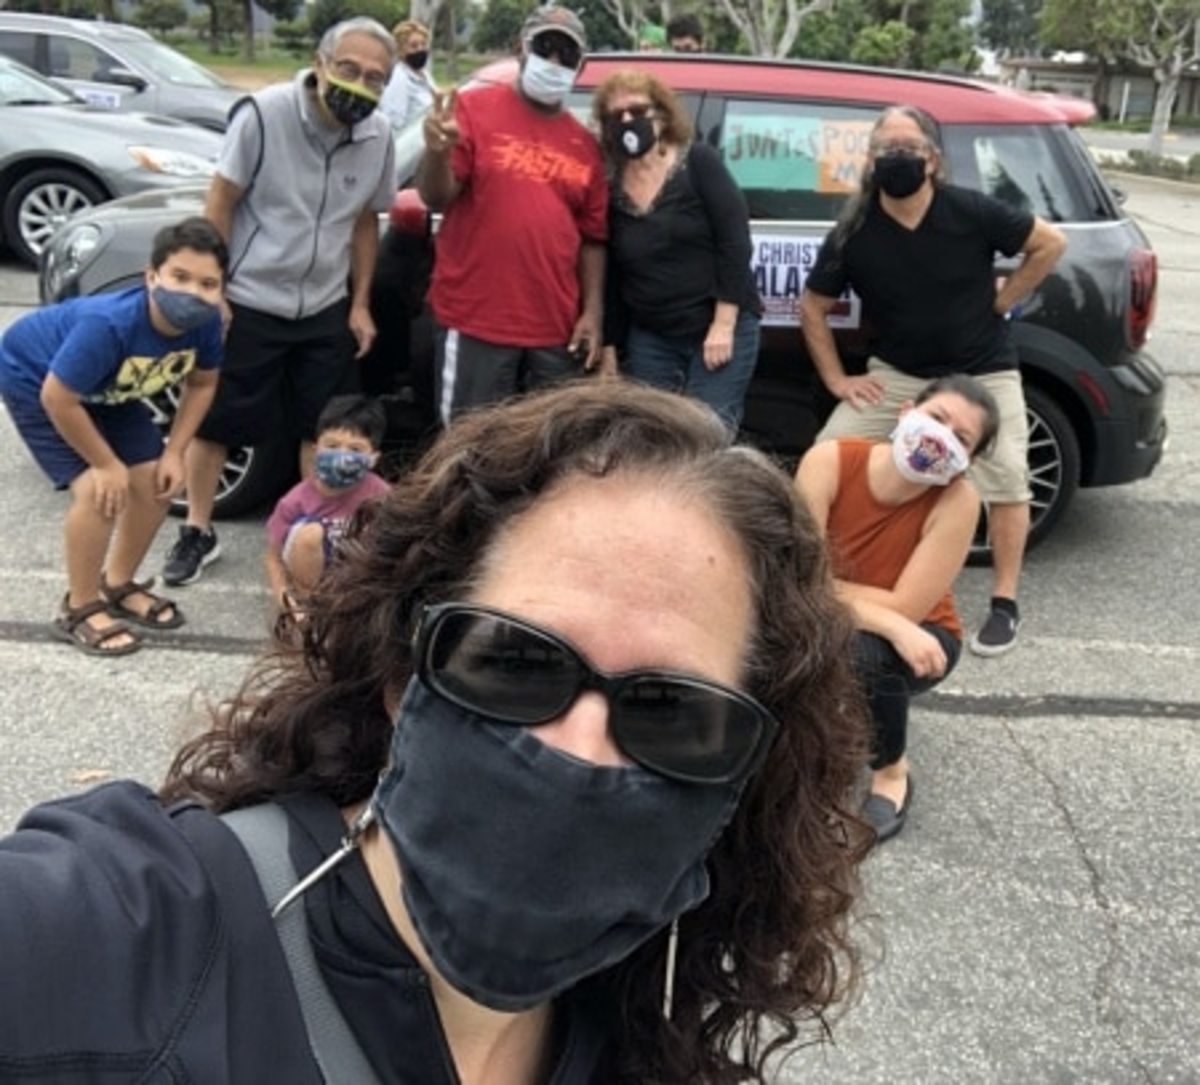 Car Caravan Selfie with Members of Juntos Podemos